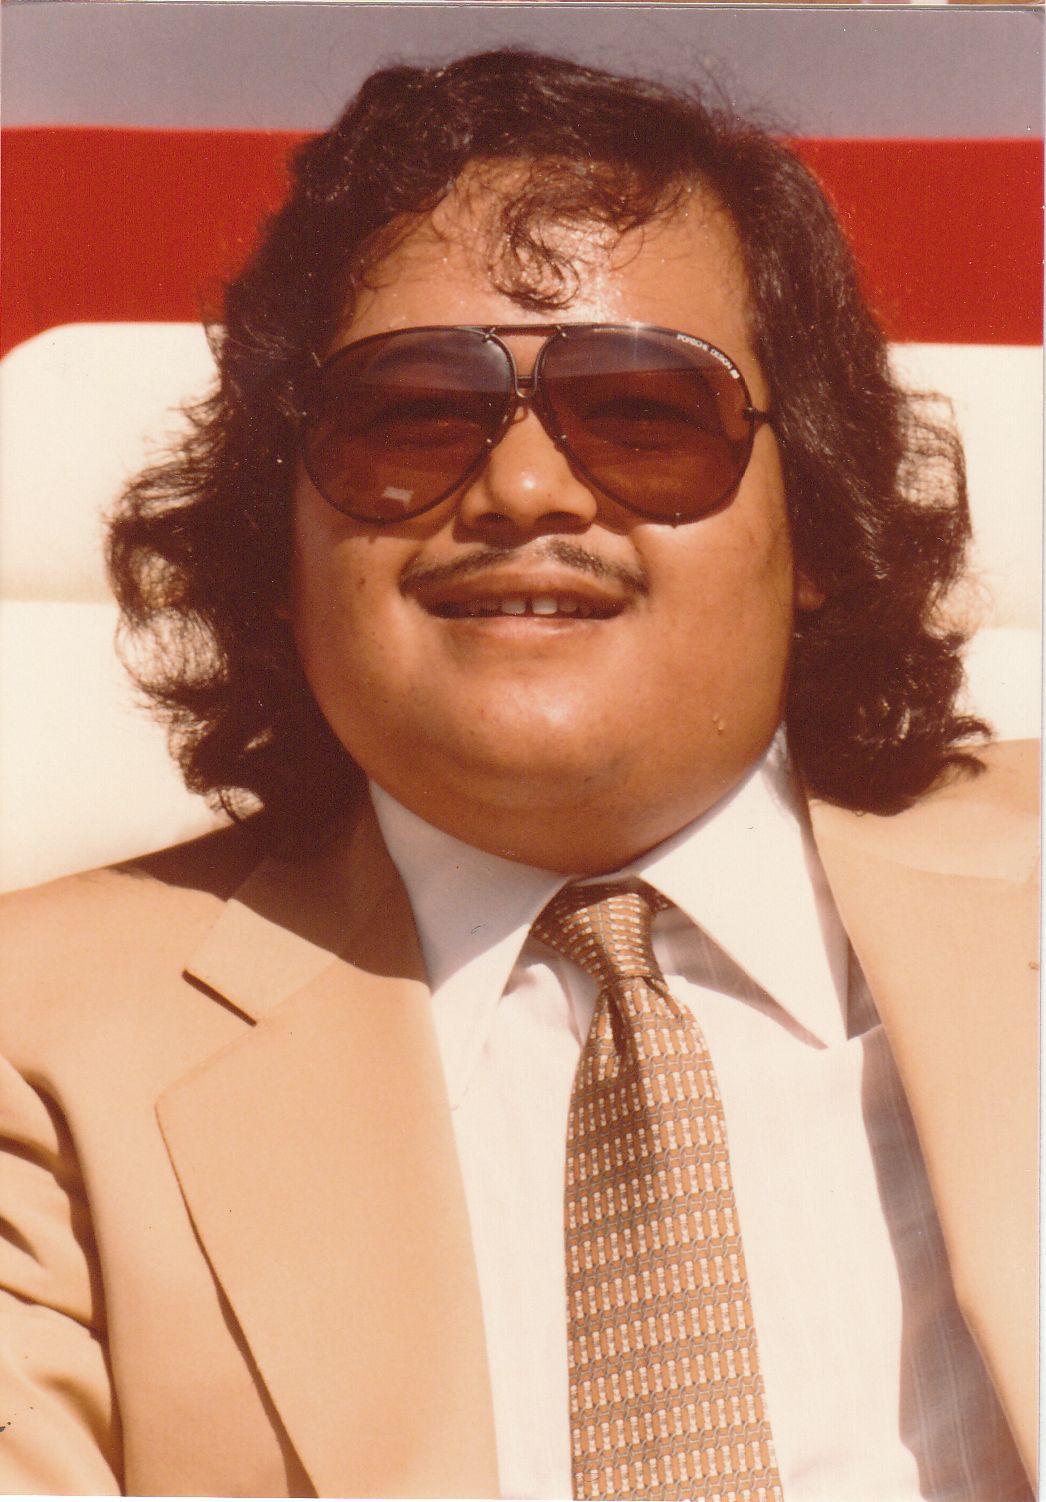 Prem Rawat (Maharaji) Photo On Stage On Throne in Sunglasses 1978